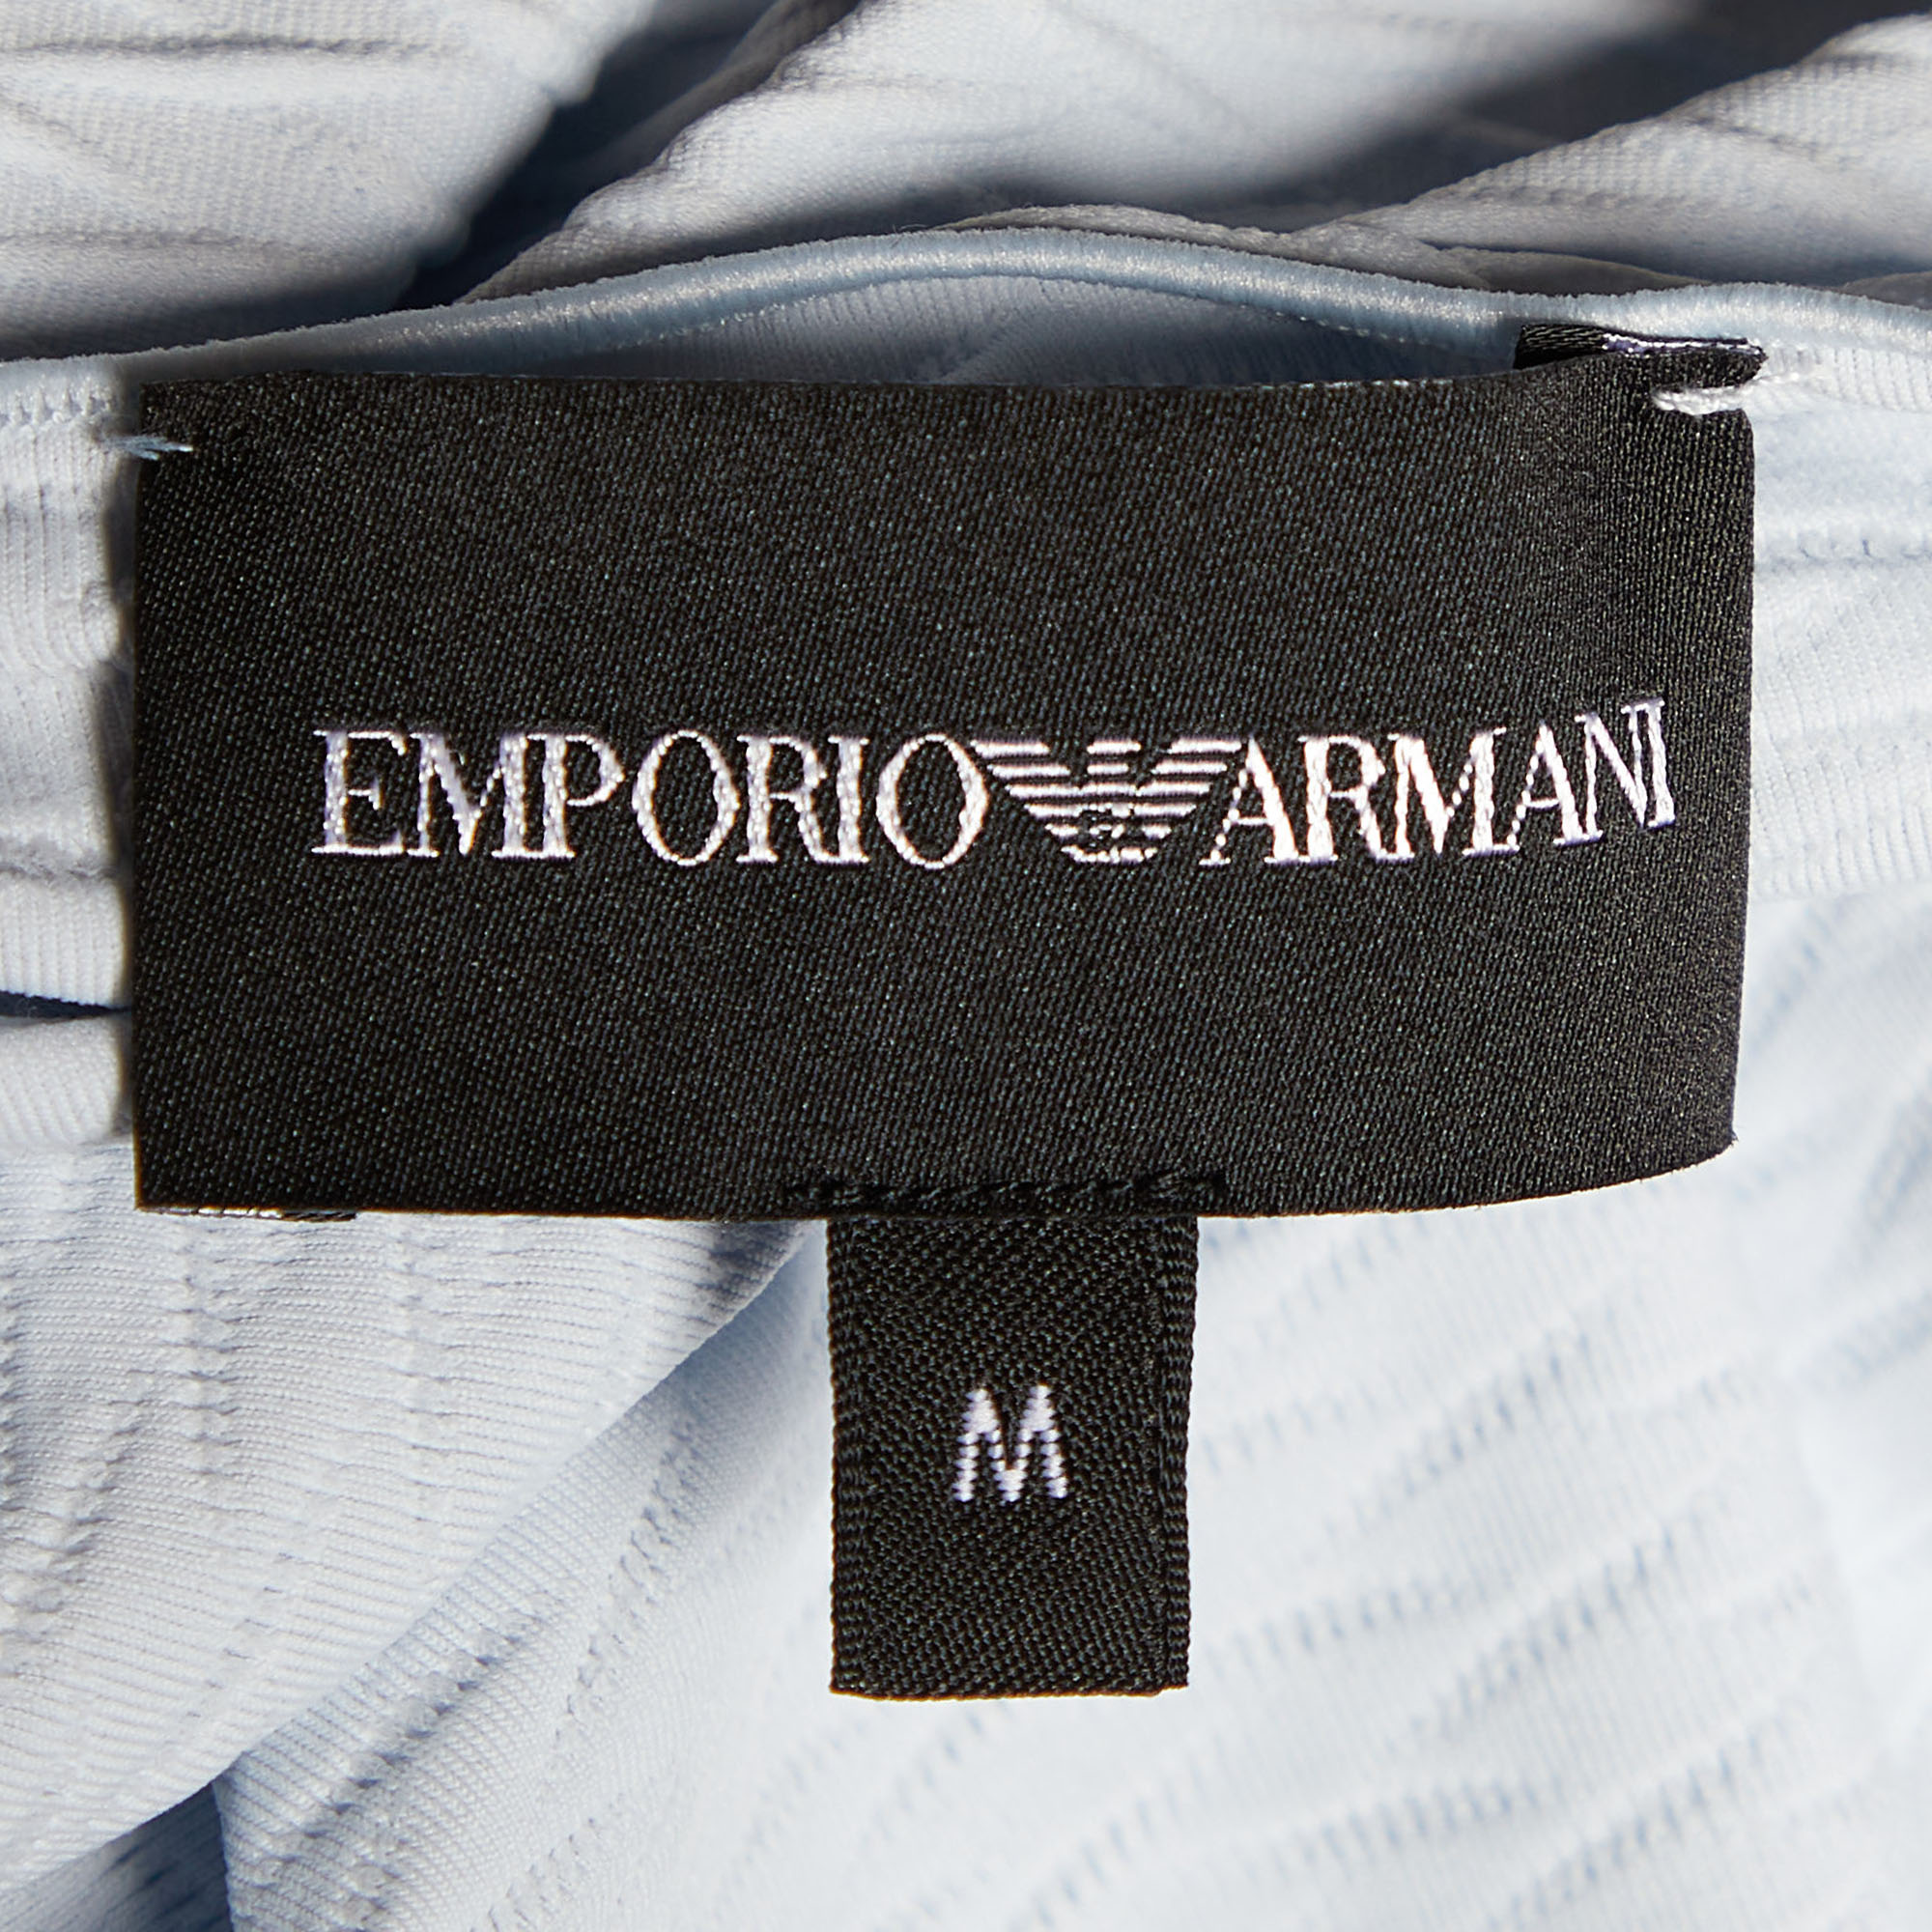 Emporio Armani Light Blue Patterned Jersey Knit Top M